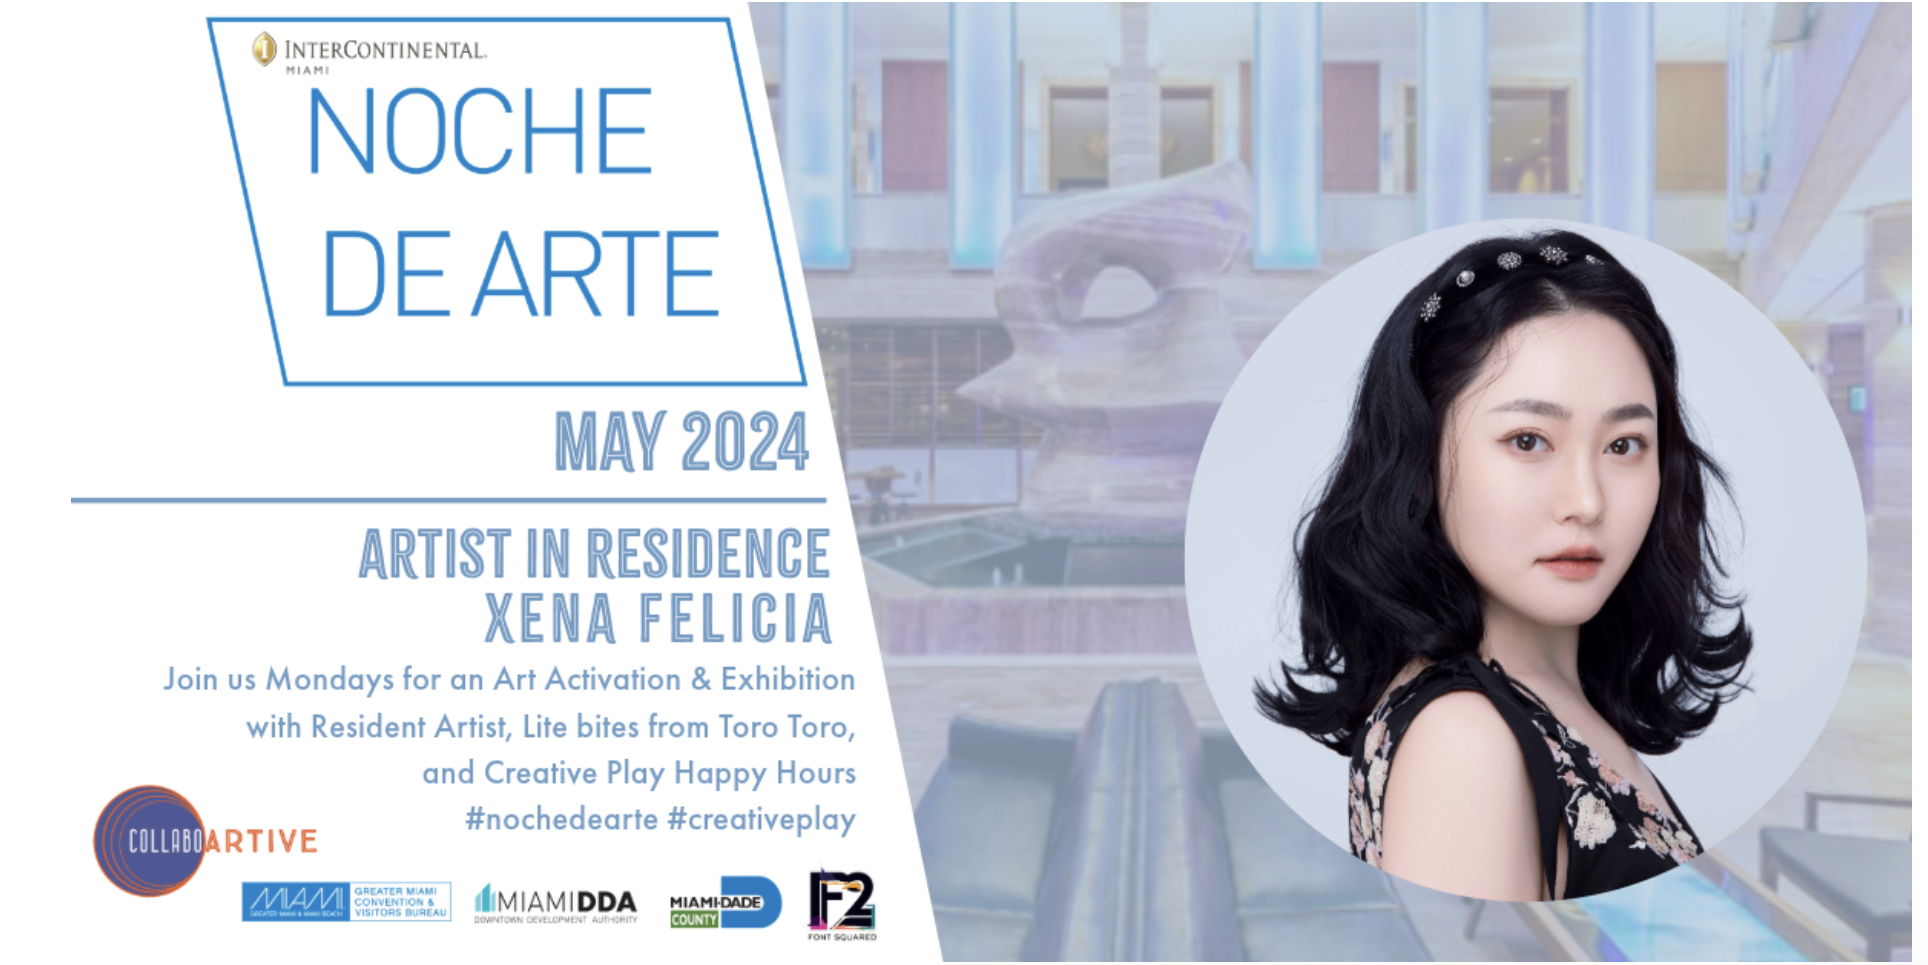 Noche de Arte with Xena Felicia promotional image